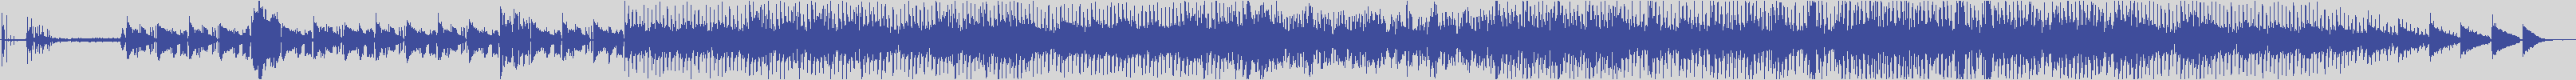 nf_boyz_records [NFY042] Tiapason - Wasting Time [Original Mix] audio wave form